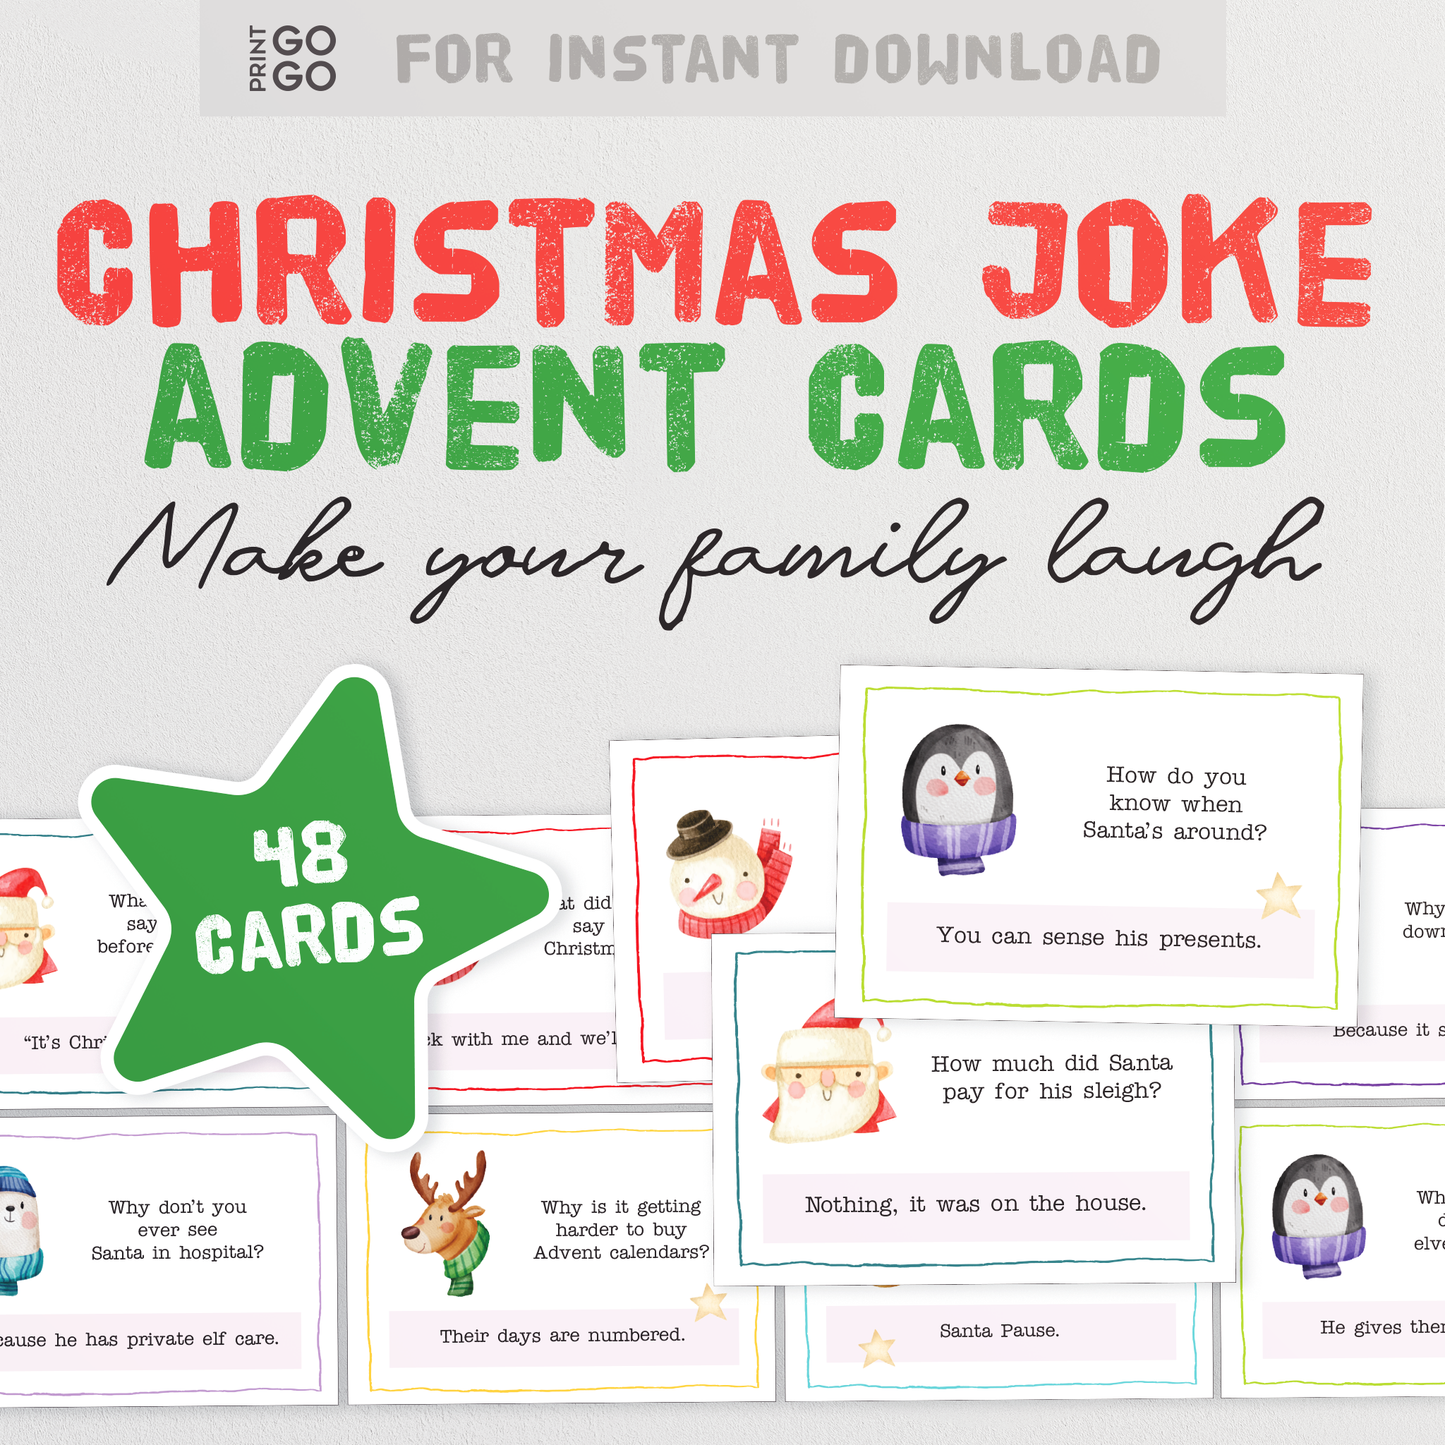 Joke Advent Cards - A Fun Way to Countdown Christmas | 48 Christmas Advent Calendar Cards | Daily Christmas Joke Cards | Christmas Printable